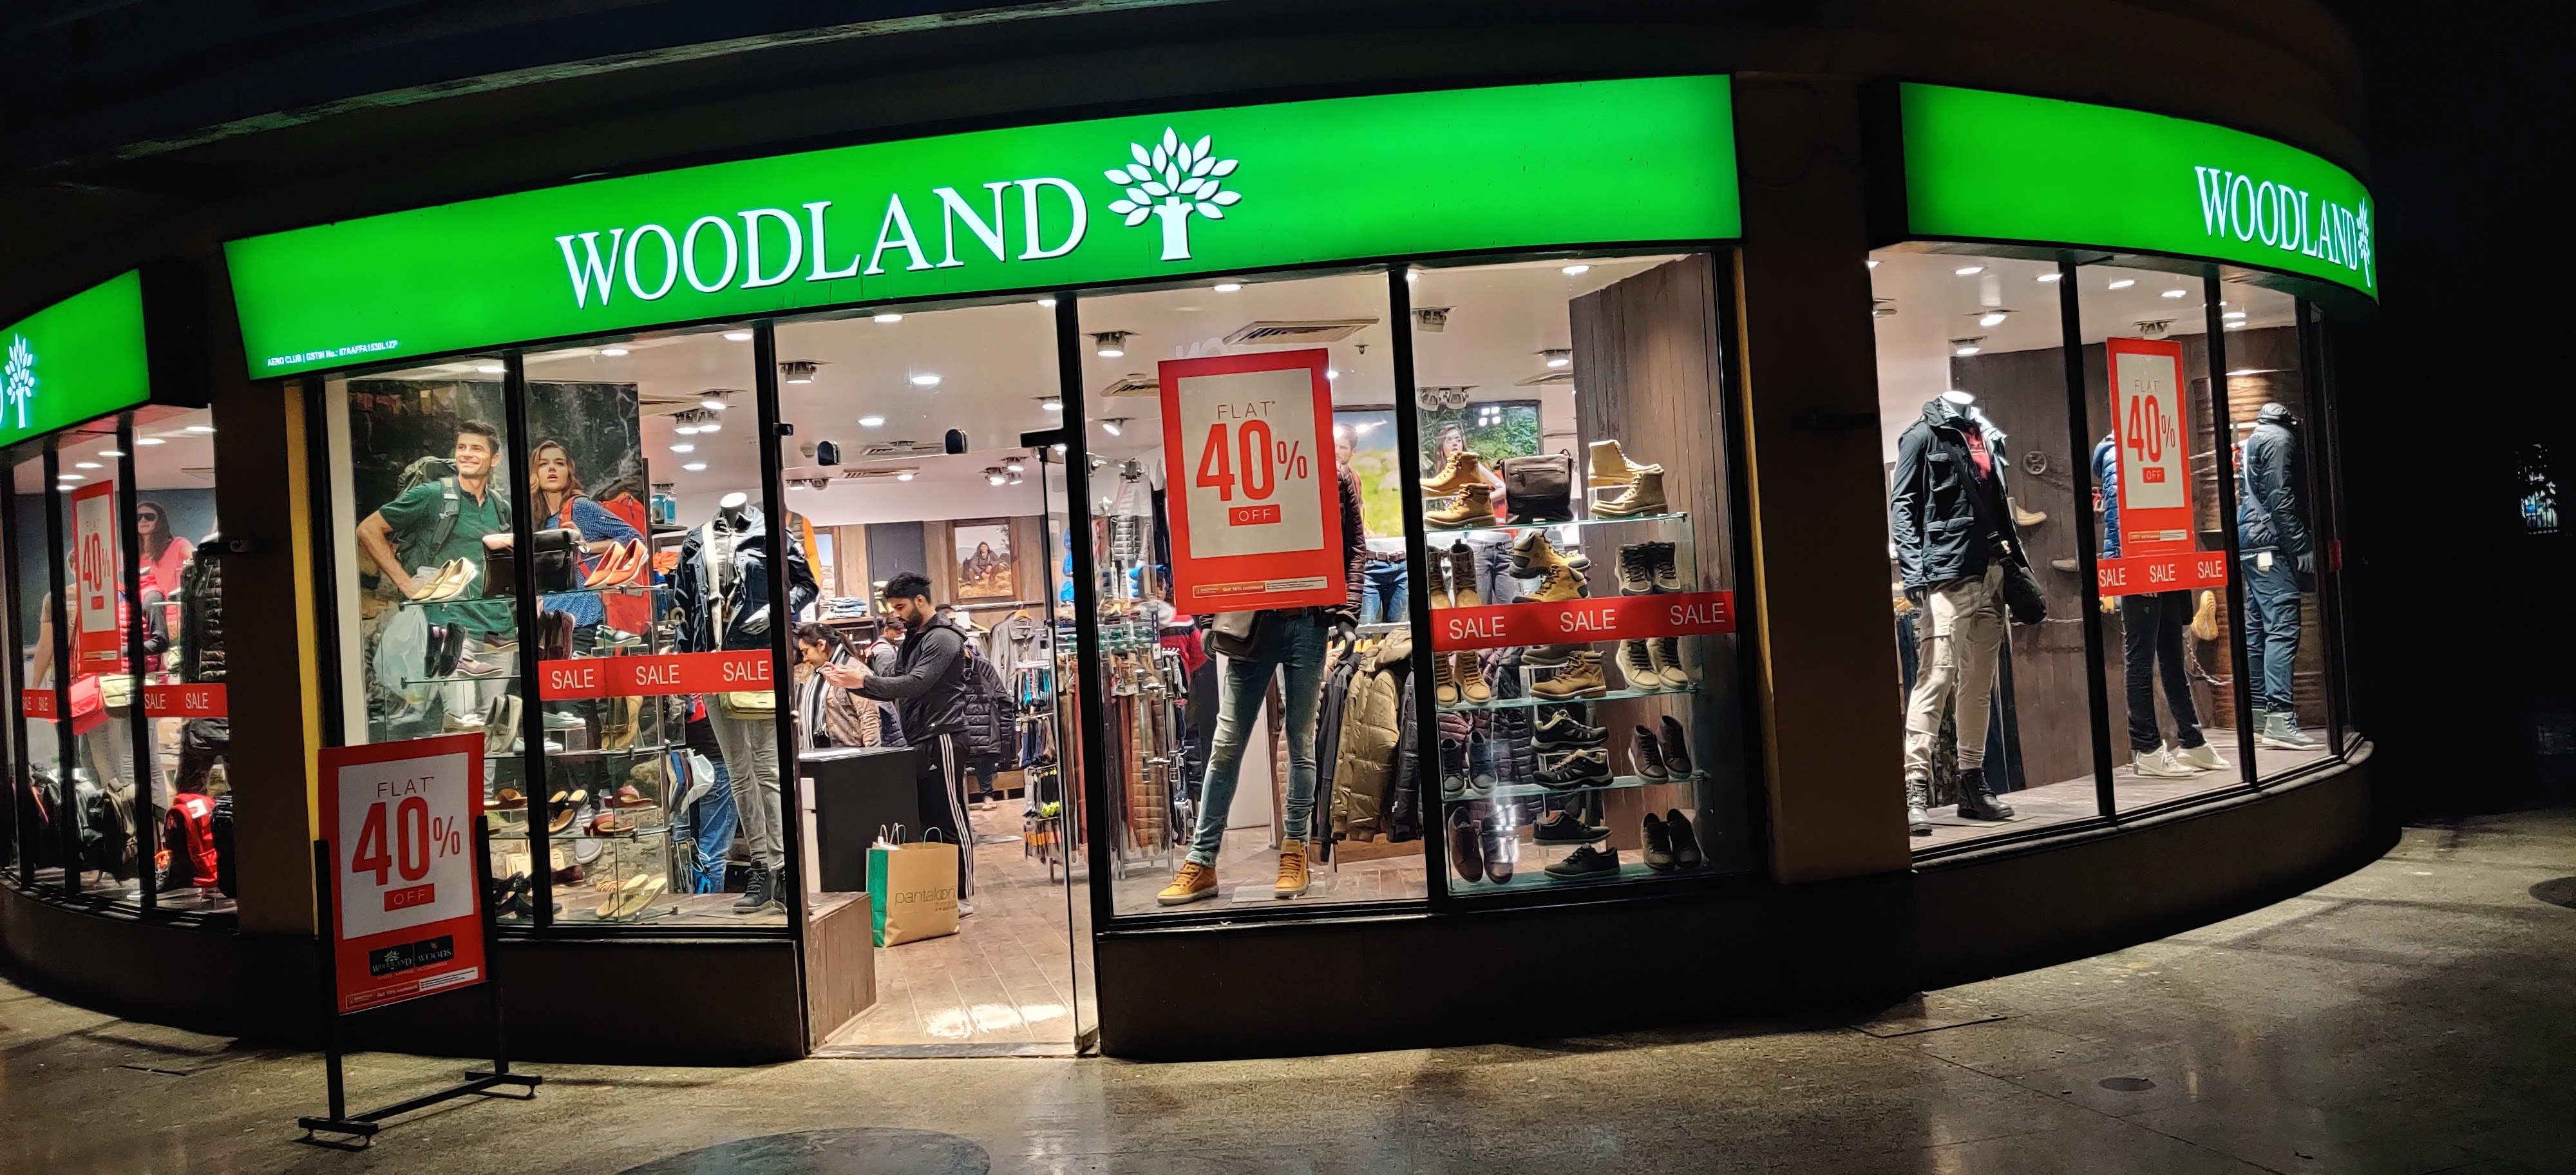 Woodland Showroom 40 Percent Sale [HD 